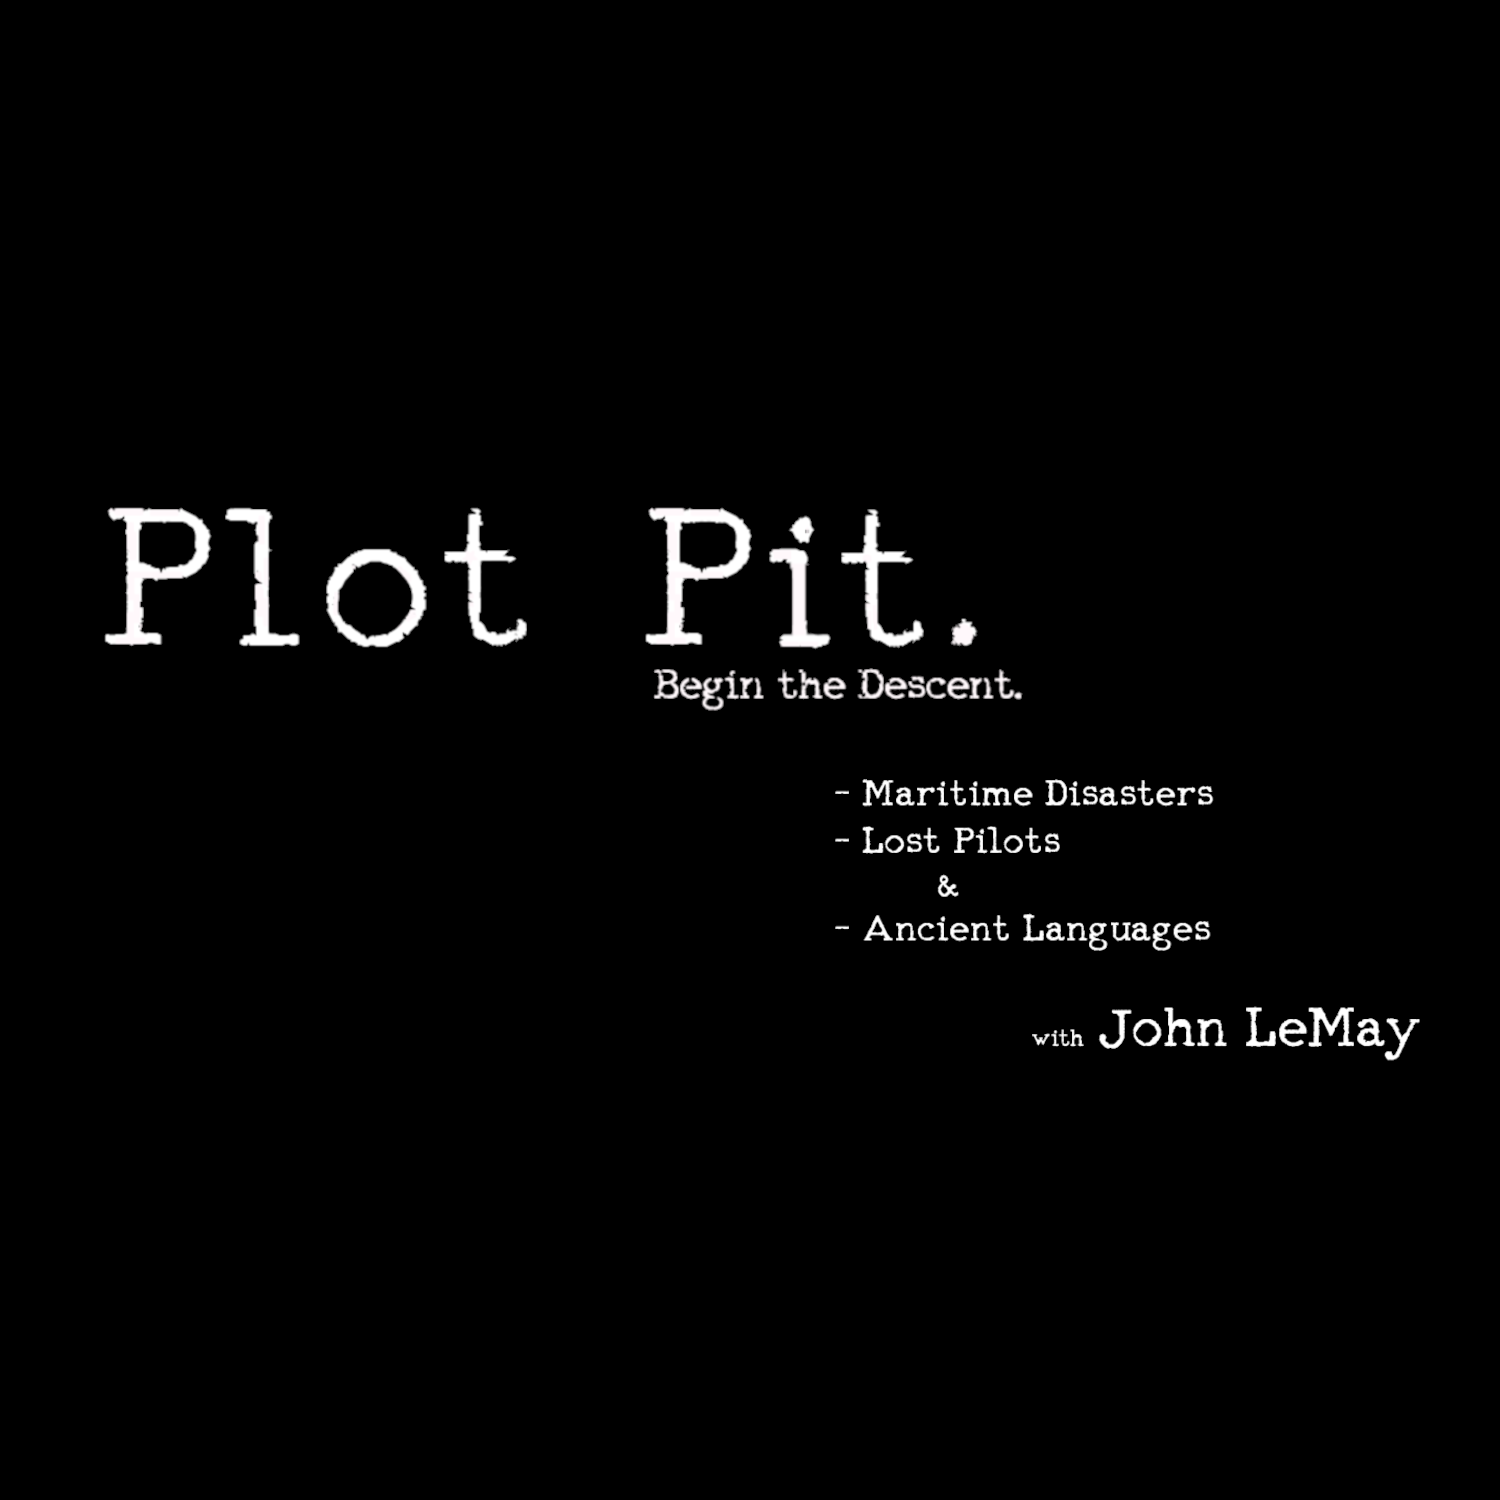 Plot Pit has Launched